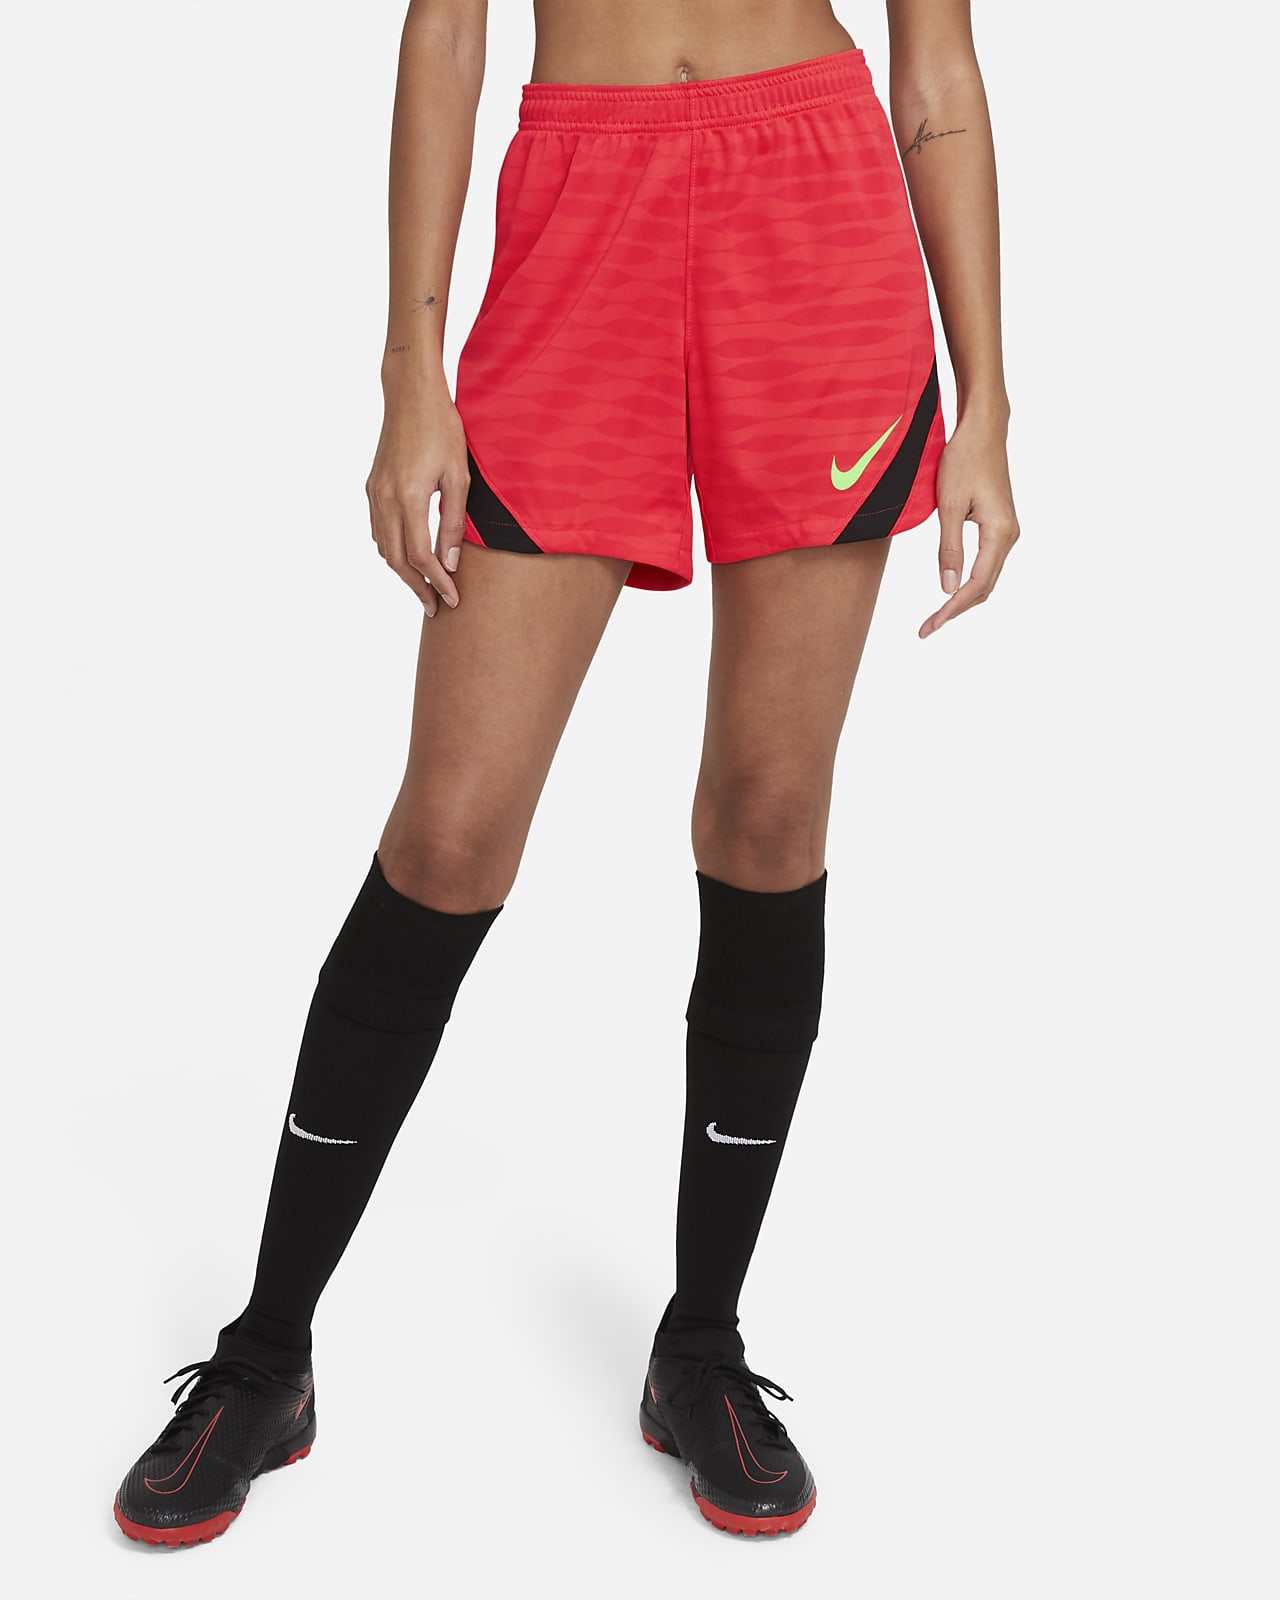 nike women's soccer shorts